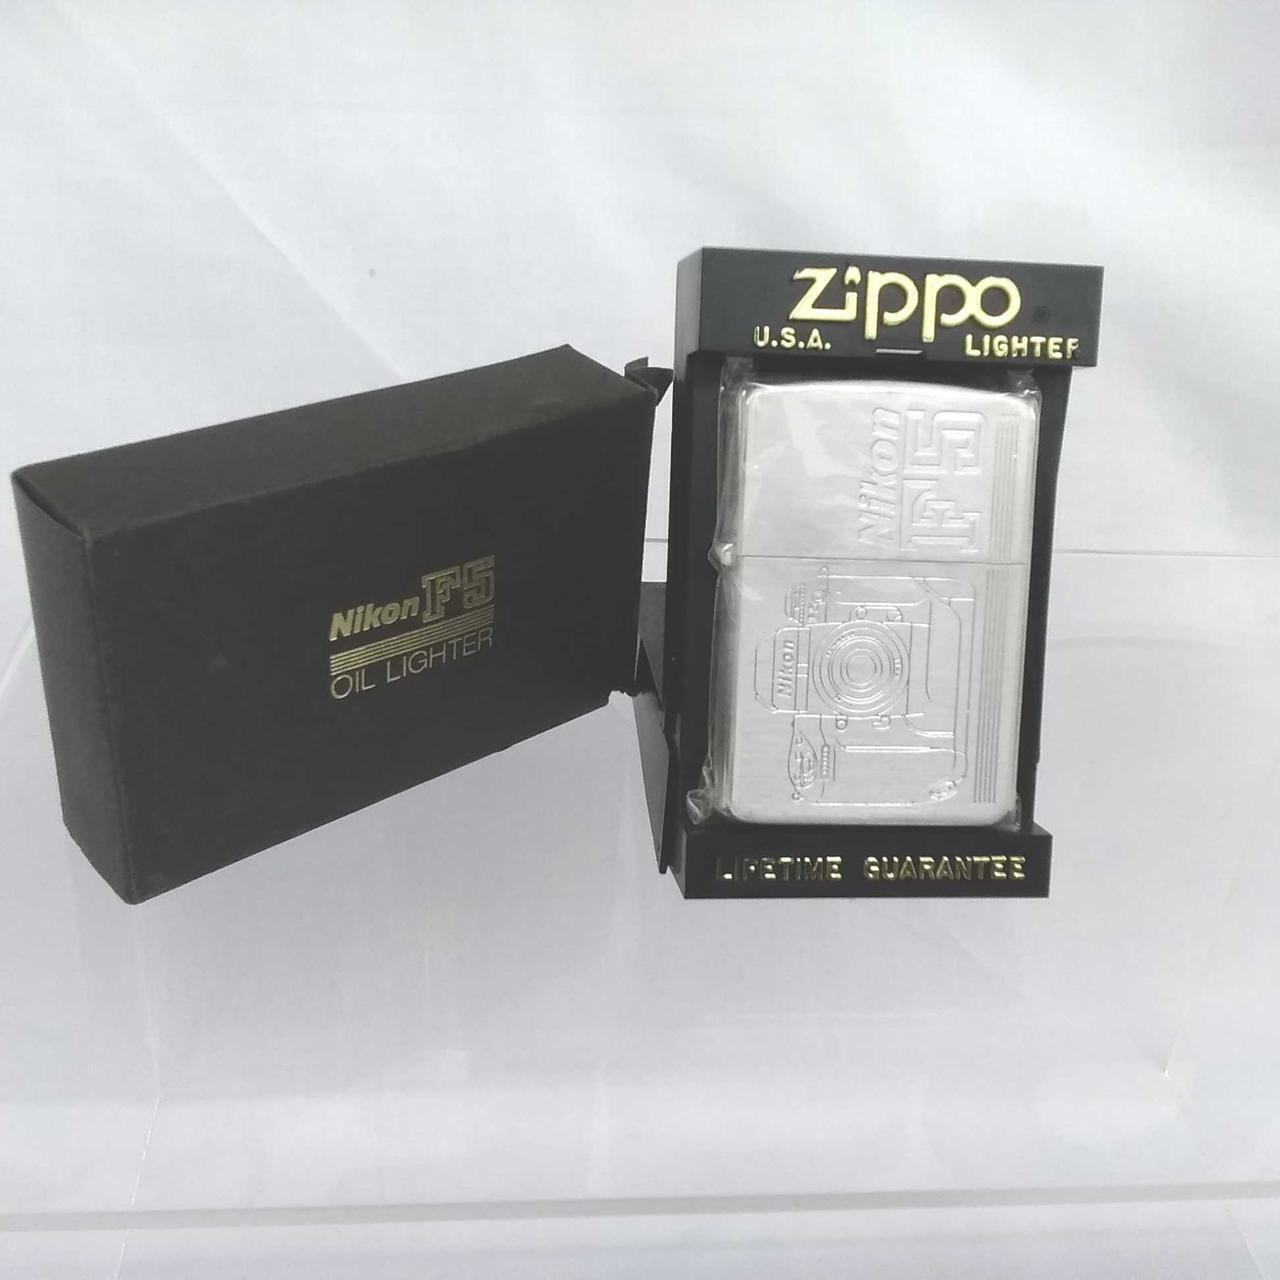 Oil lighter model number Nikon F5 release commemorative limited edition ZIPPO